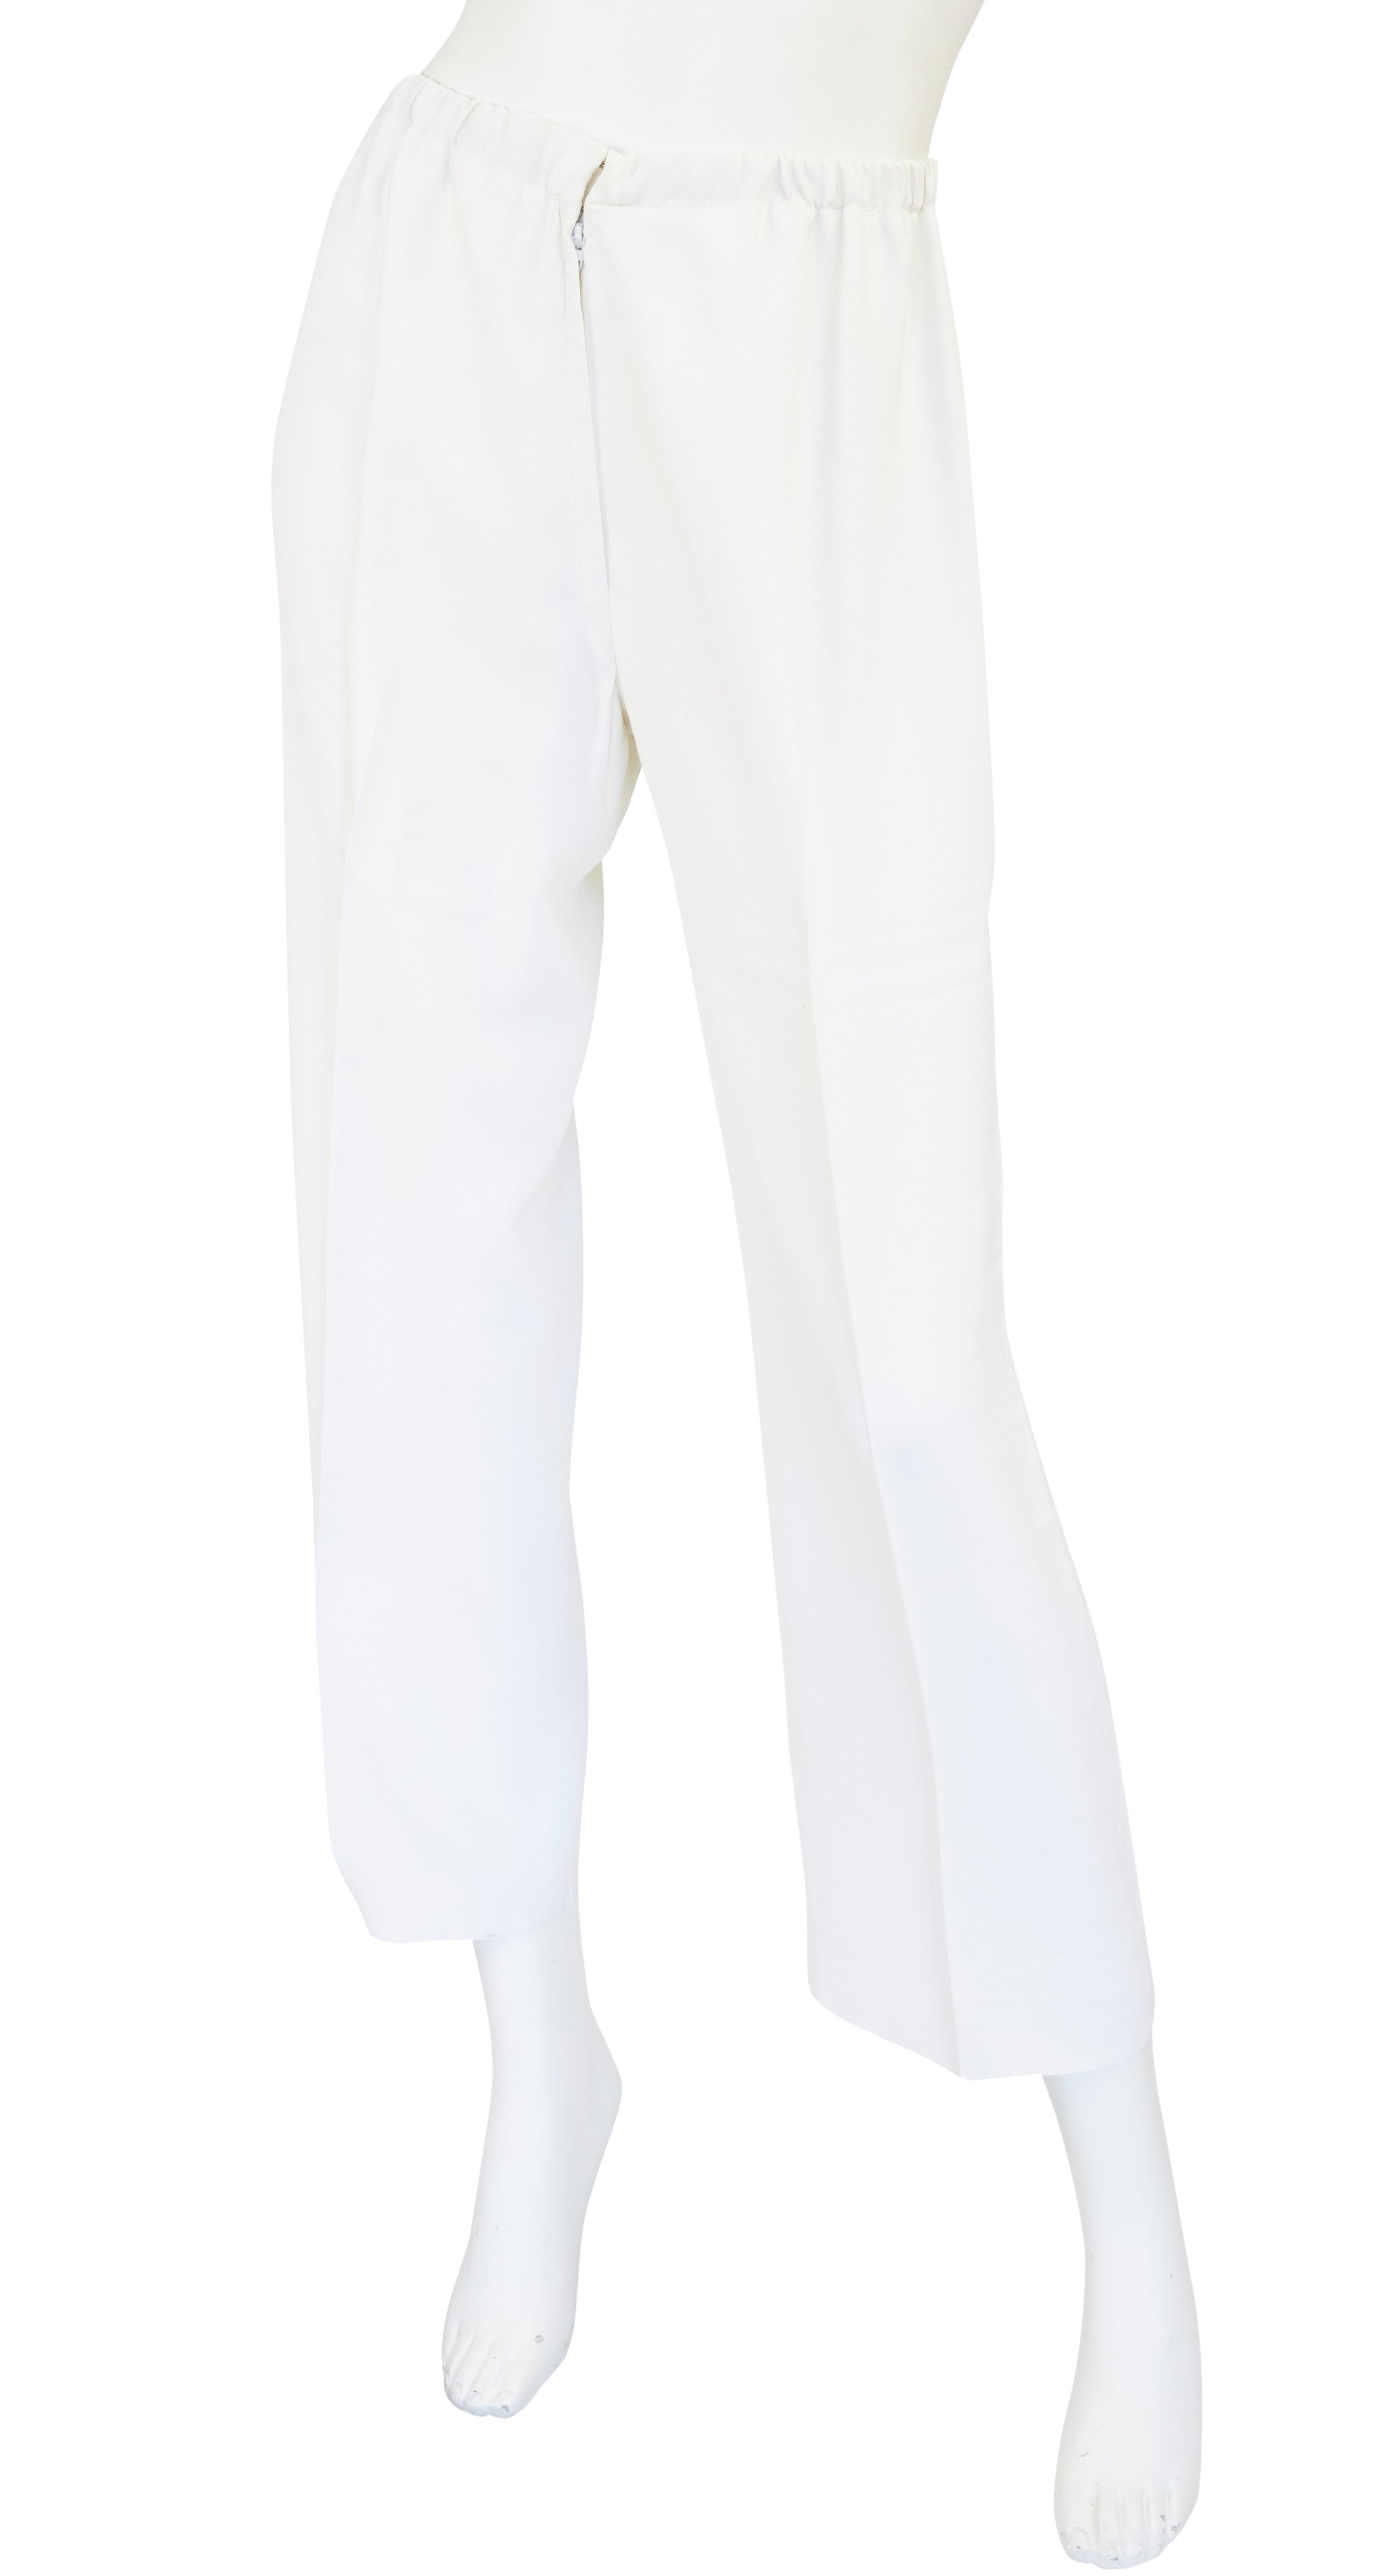 1960s Metallic Paisley & White Crepe Outfit